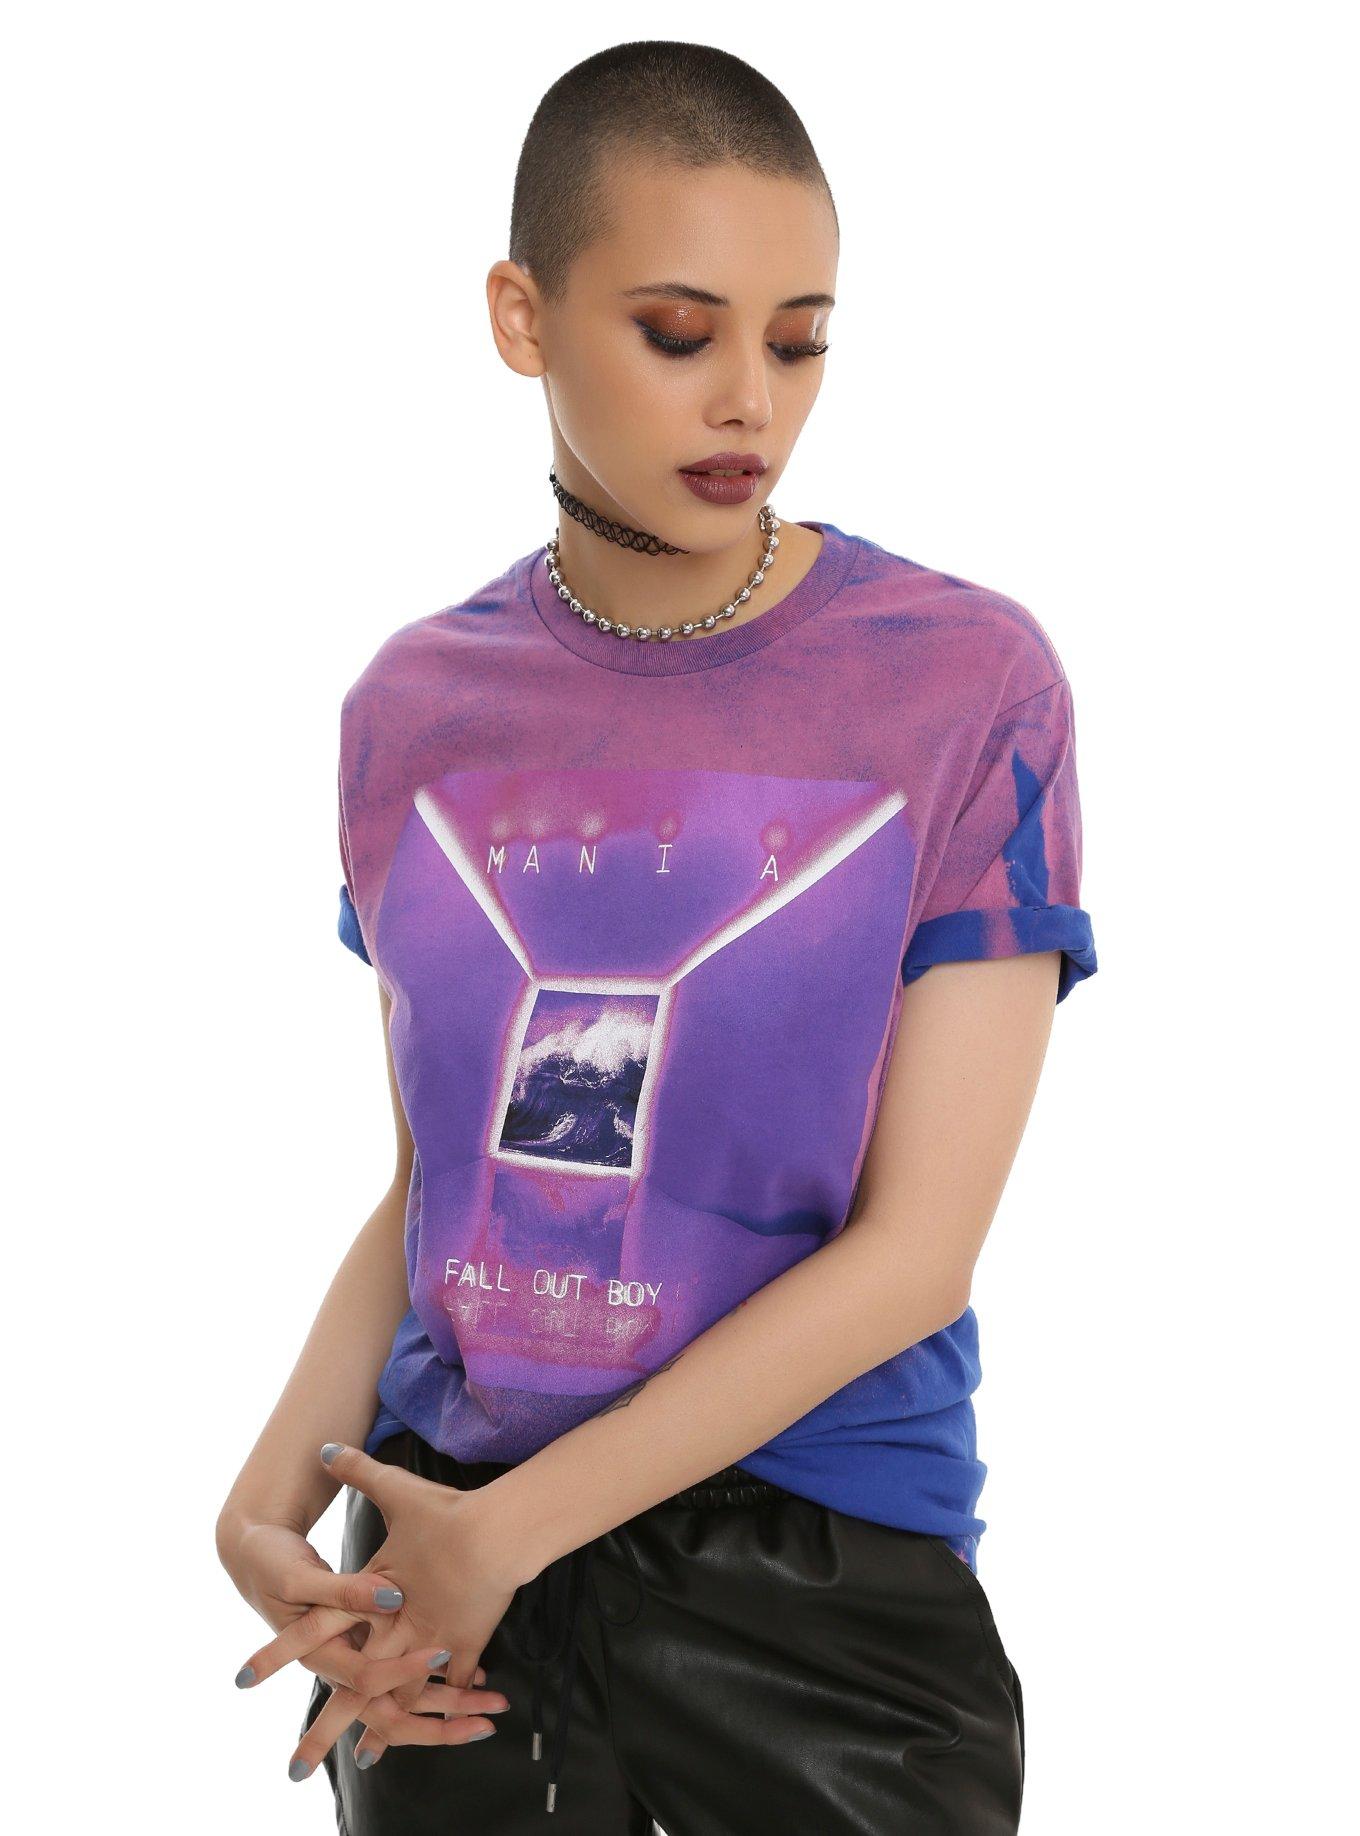 Fall Out Boy Mania Tie-Dye Girls T-Shirt, PURPLE, hi-res